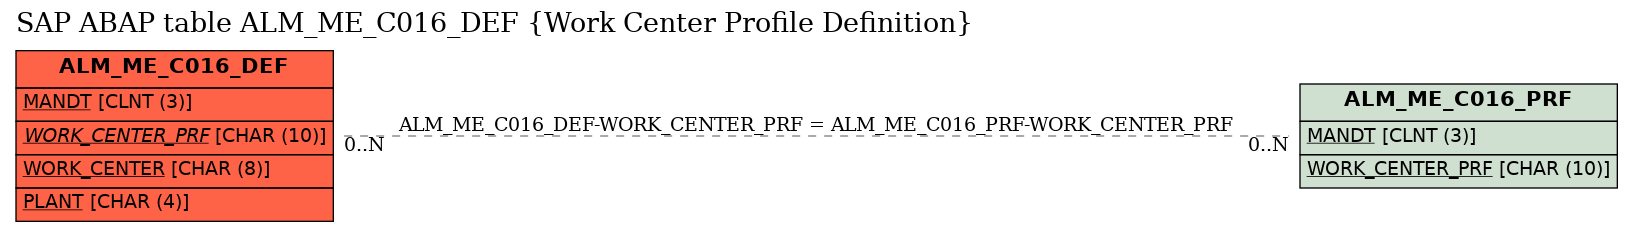 E-R Diagram for table ALM_ME_C016_DEF (Work Center Profile Definition)